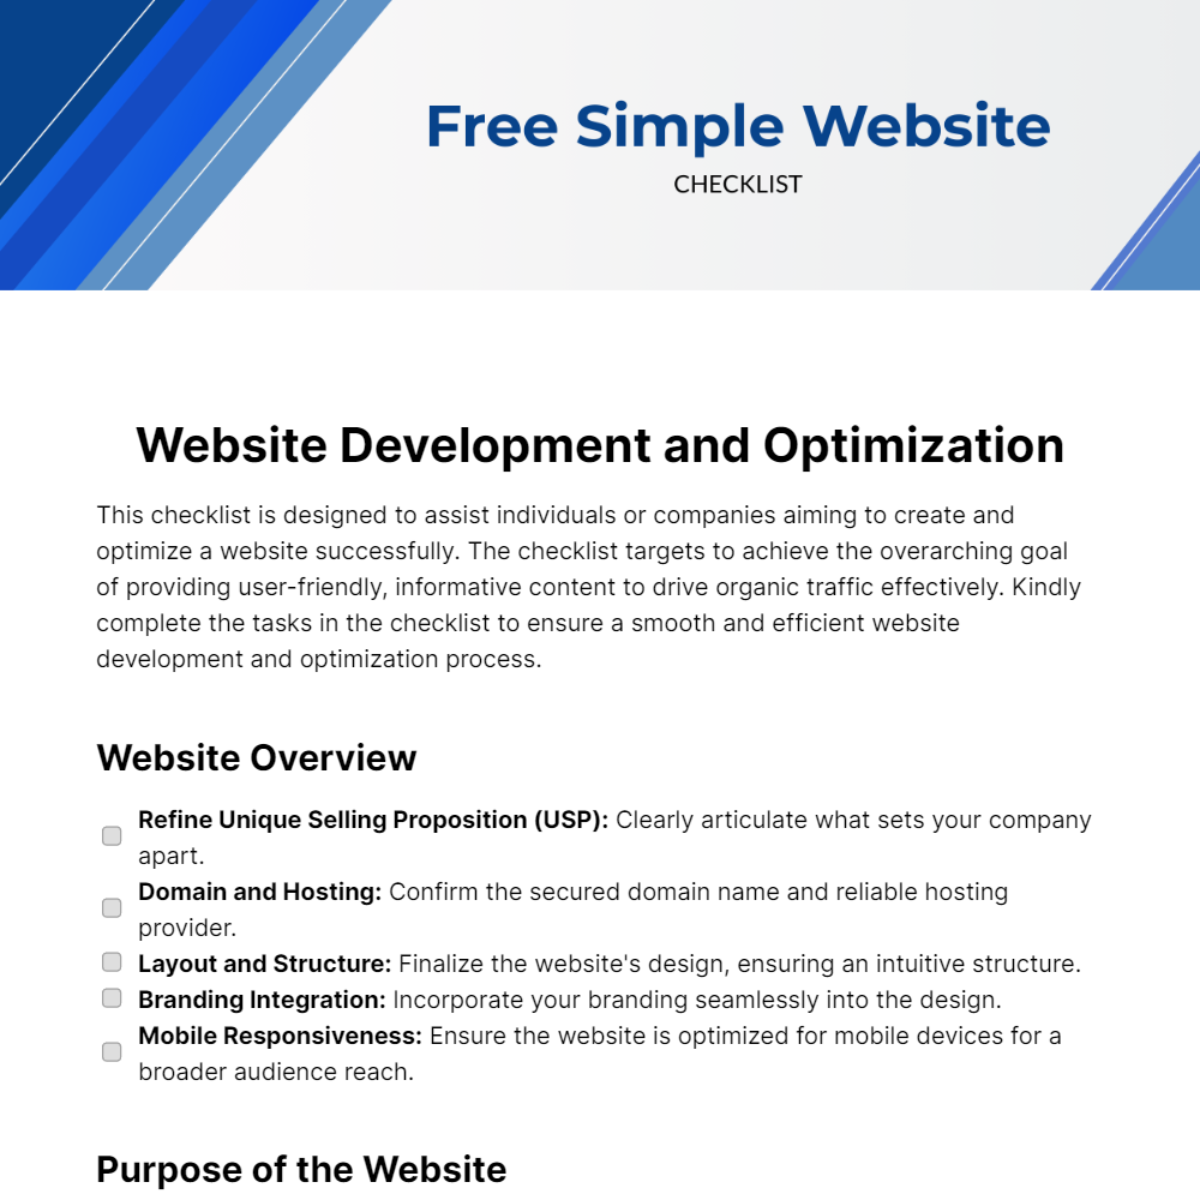 Free Simple Website Checklist Template